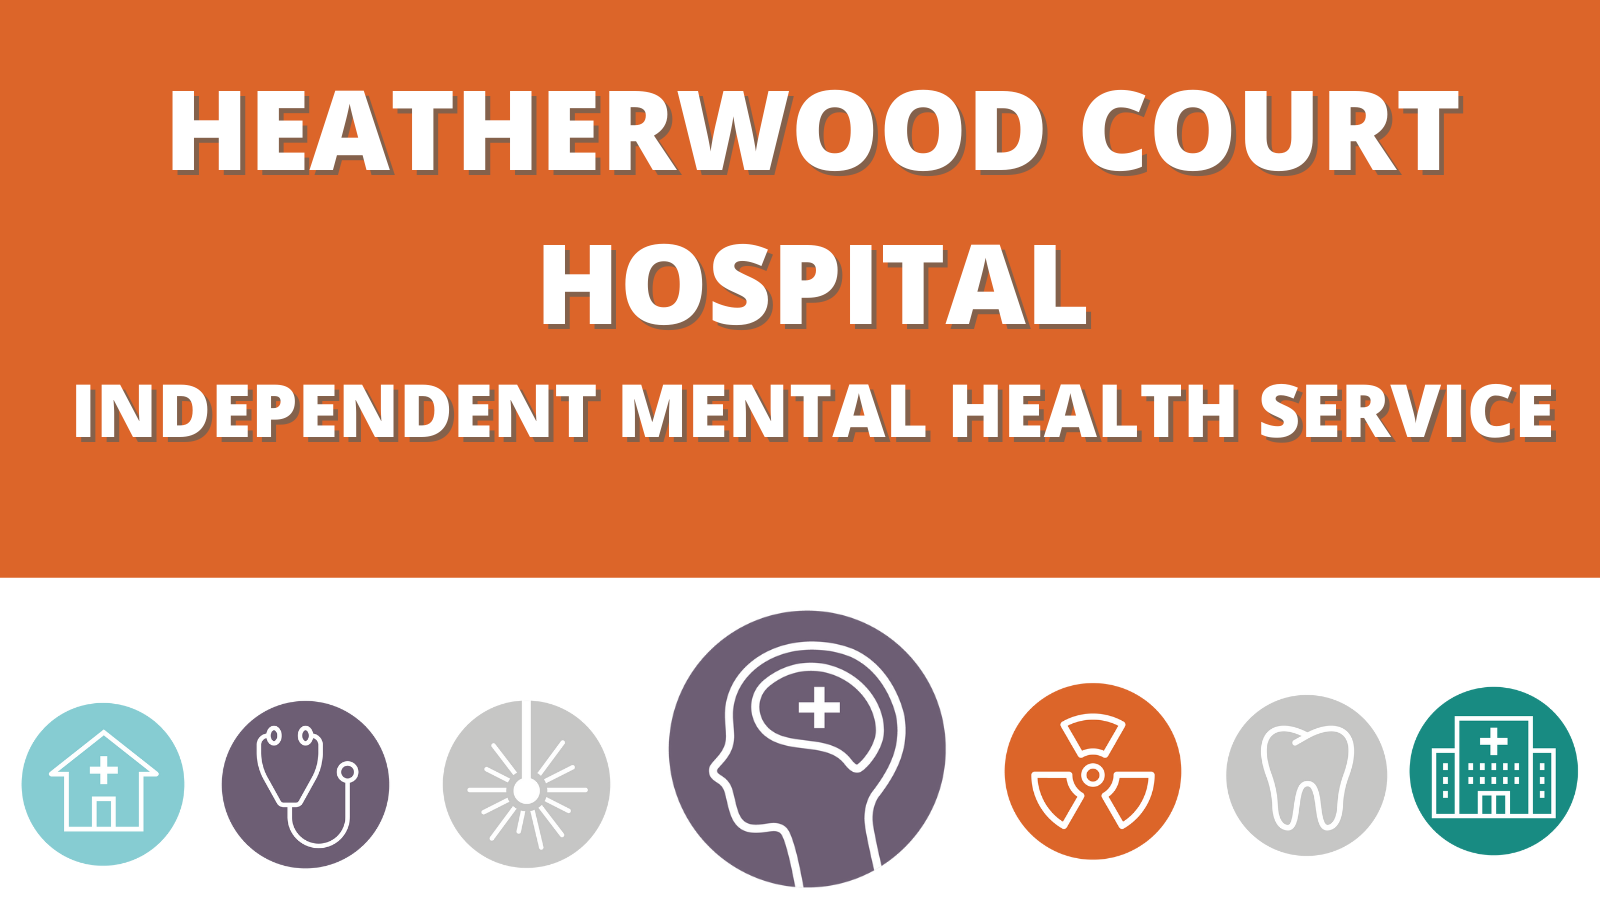 Heatherwood Court Hospital - Independent mental health service